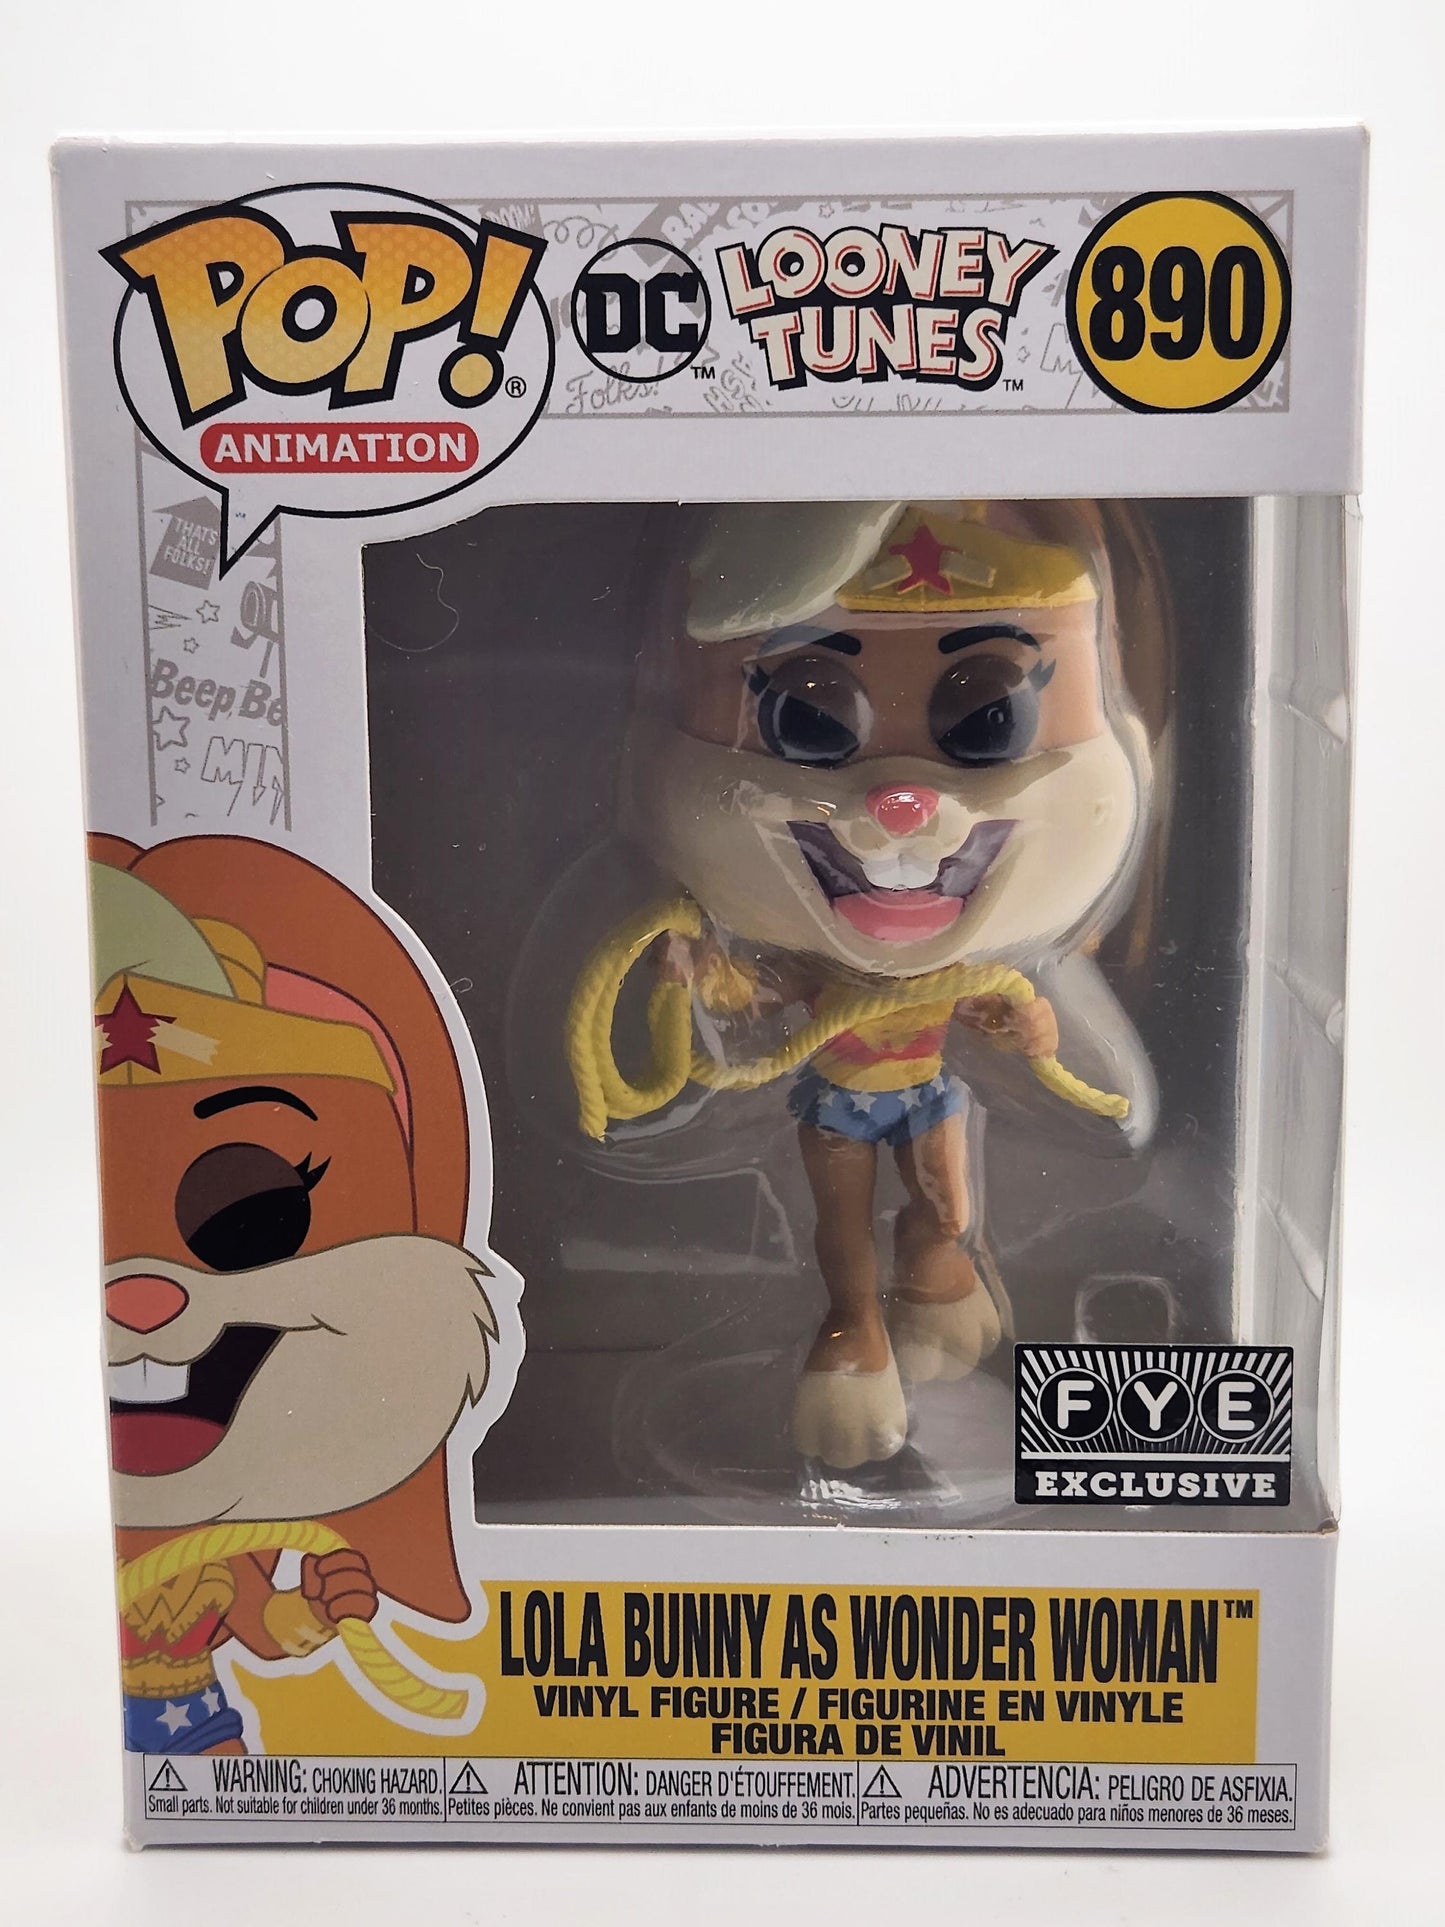 Lola Bunny as Wonder Woman - #890 - Box Condition 8/10